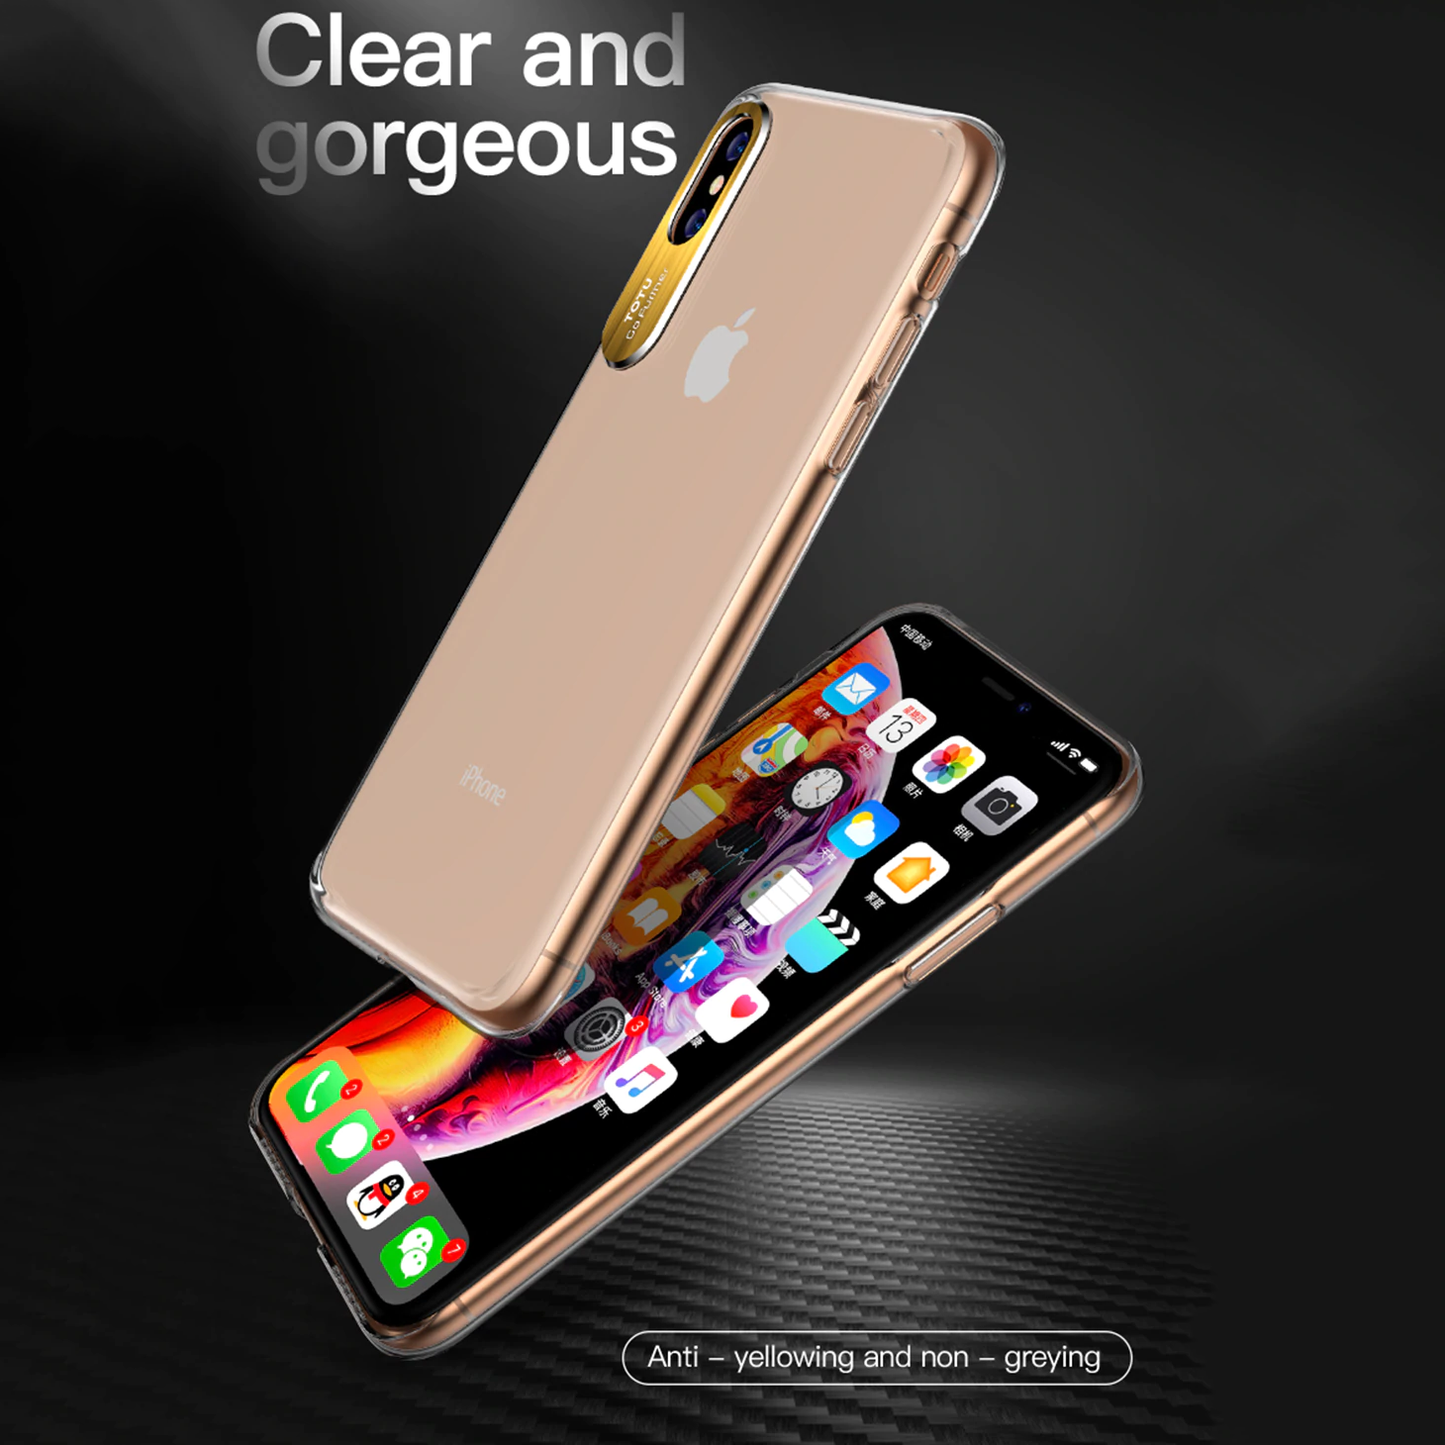 TOTU ® iPhone X Clear Camera Protective Case